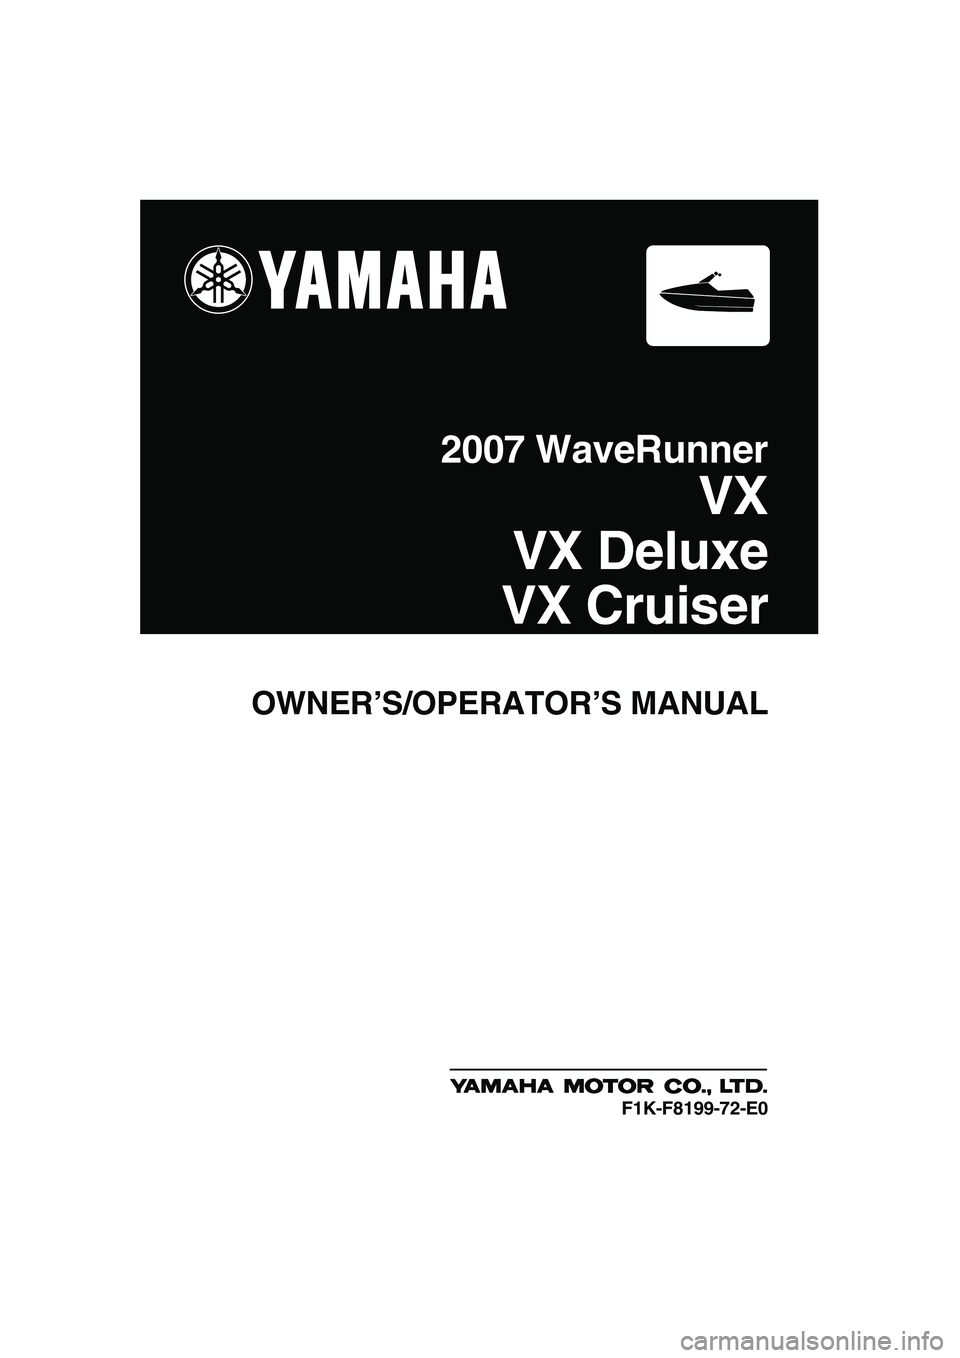 YAMAHA VX SPORT 2007  Owners Manual OWNER’S/OPERATOR’S MANUAL
2007 WaveRunner
VX
VX Deluxe
VX Cruiser
F1K-F8199-72-E0
UF1K72E0.book  Page 1  Wednesday, August 2, 2006  10:43 AM 